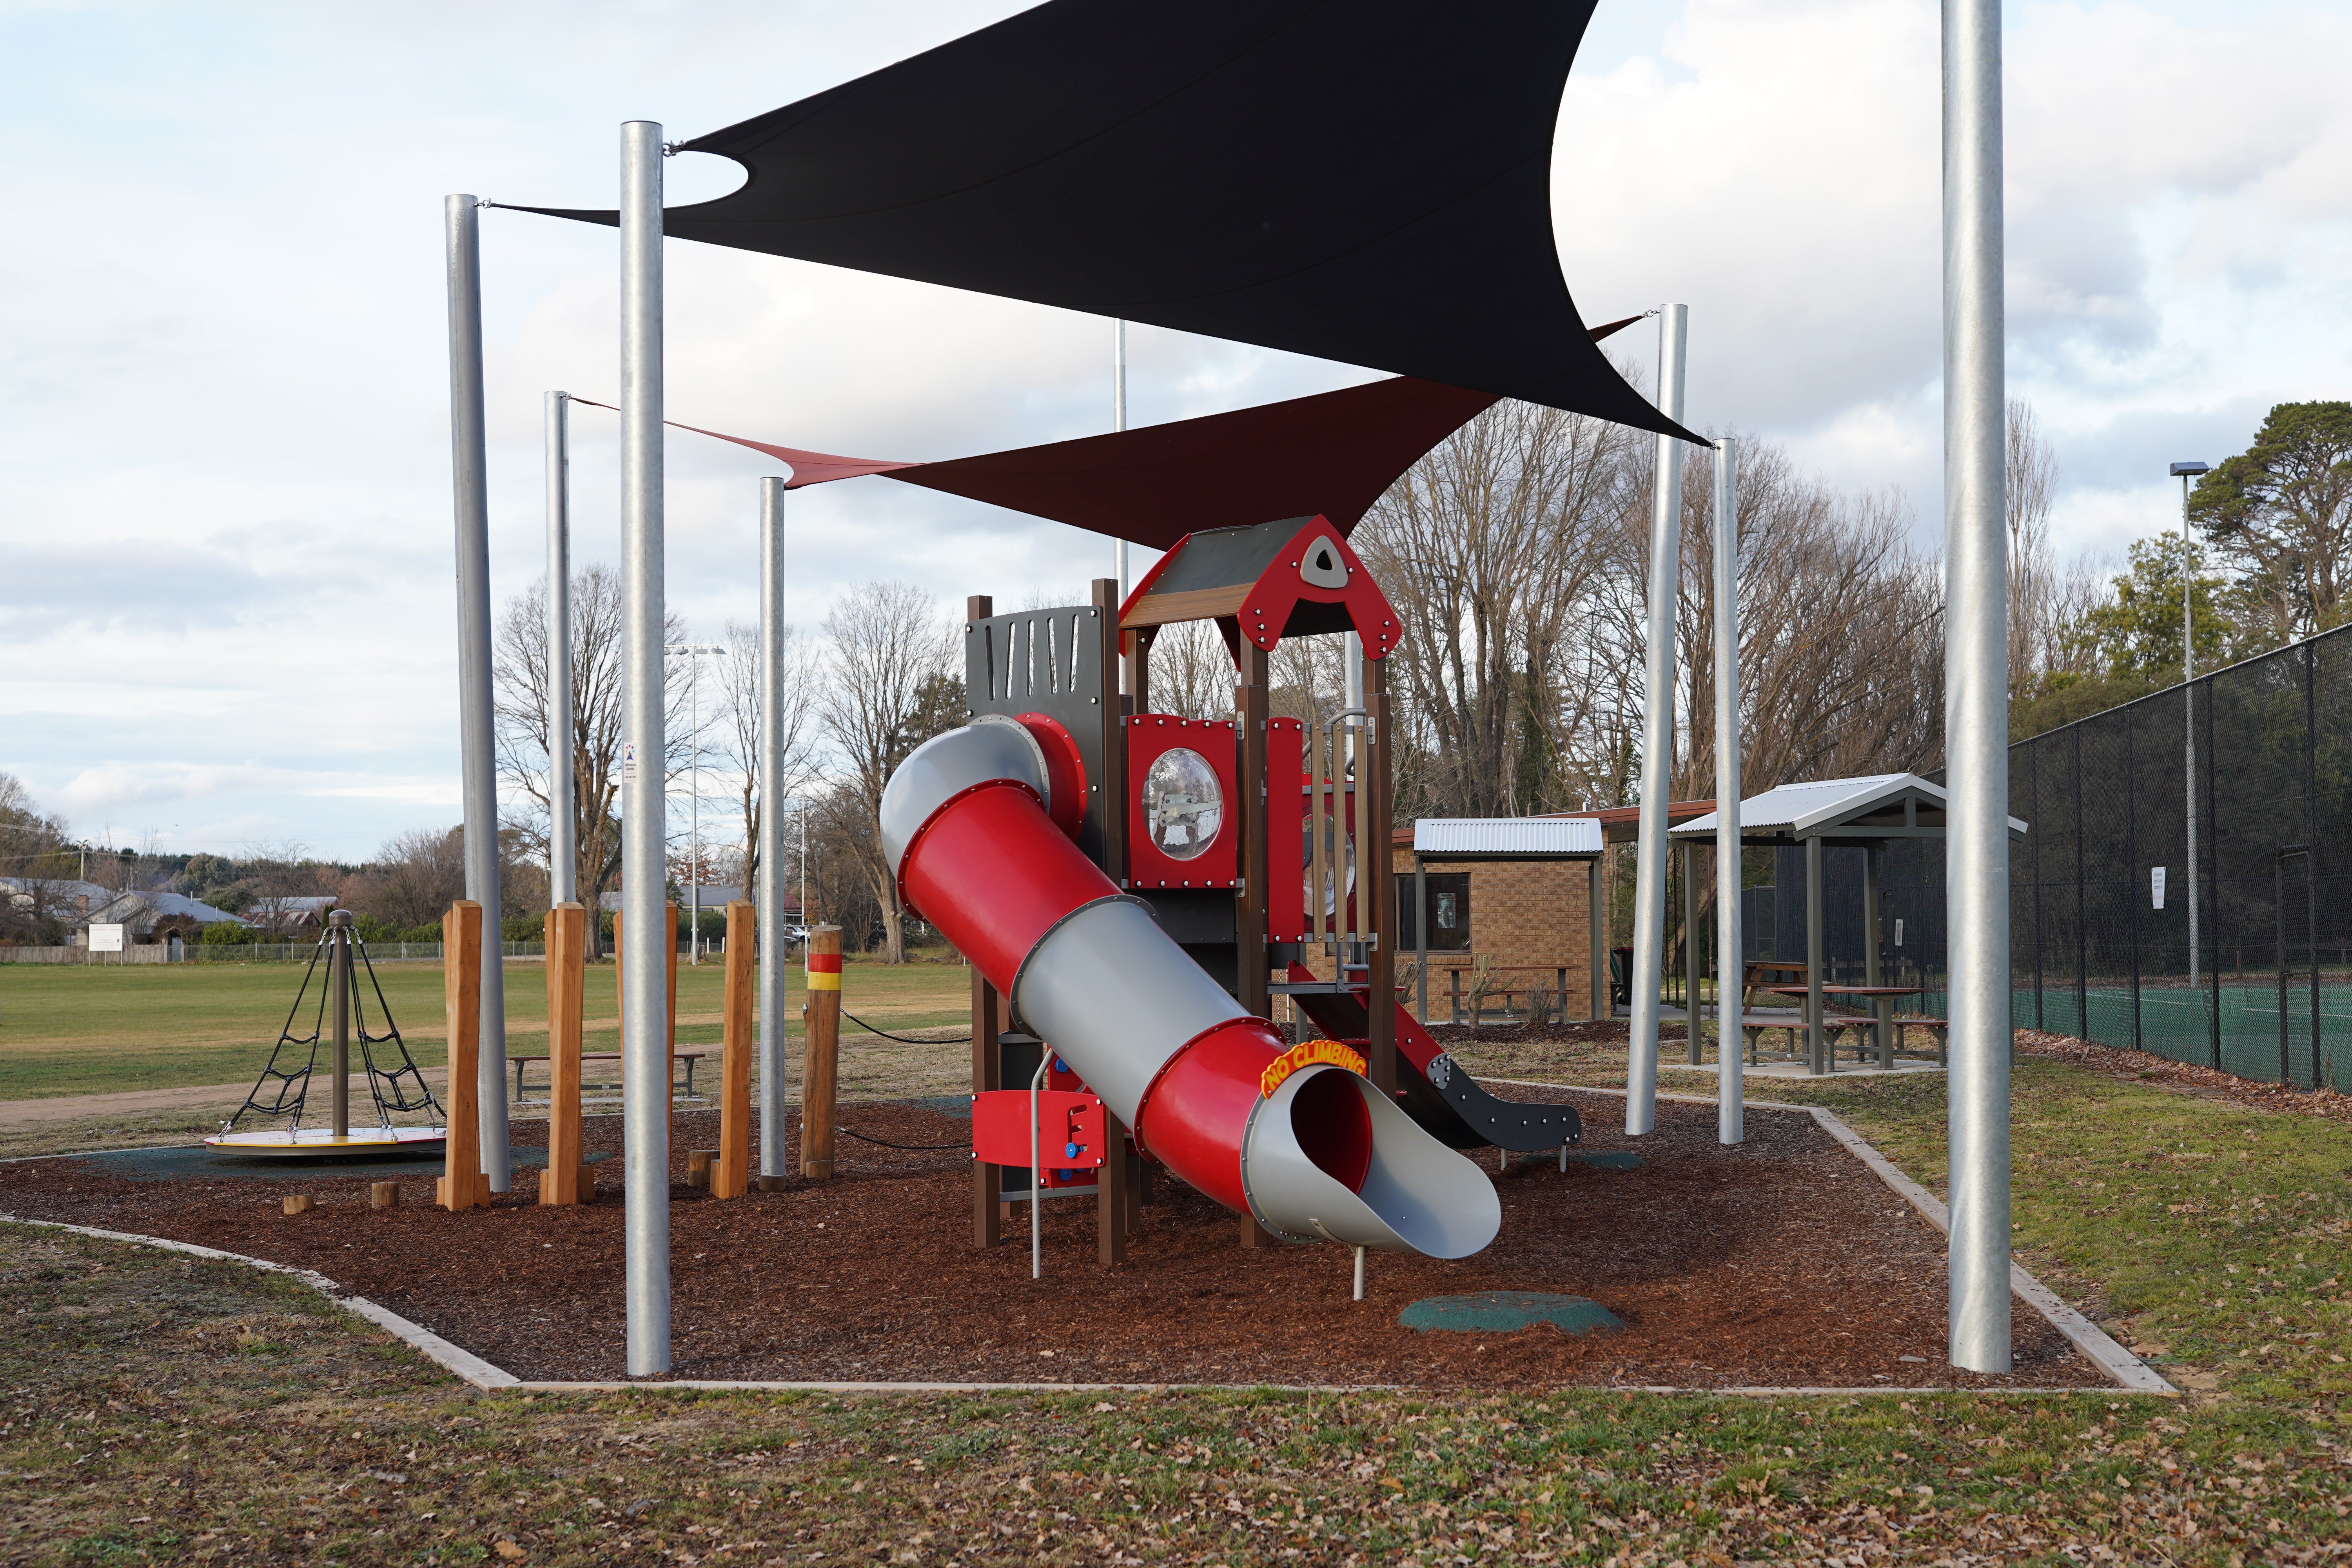 Braidwood Recreation Grounds and Playground - Australia Accommodation